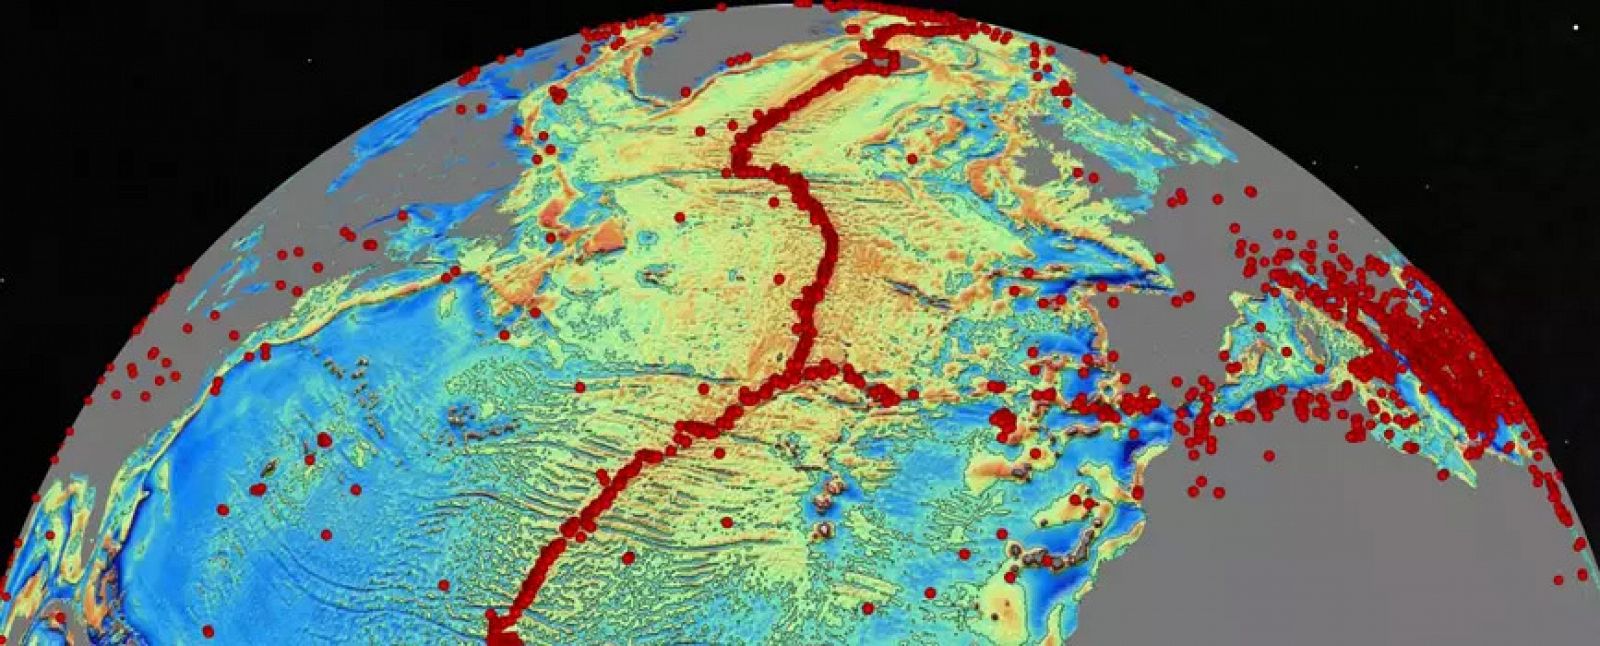 Detalle del mapa de las montañas del fondo marino.